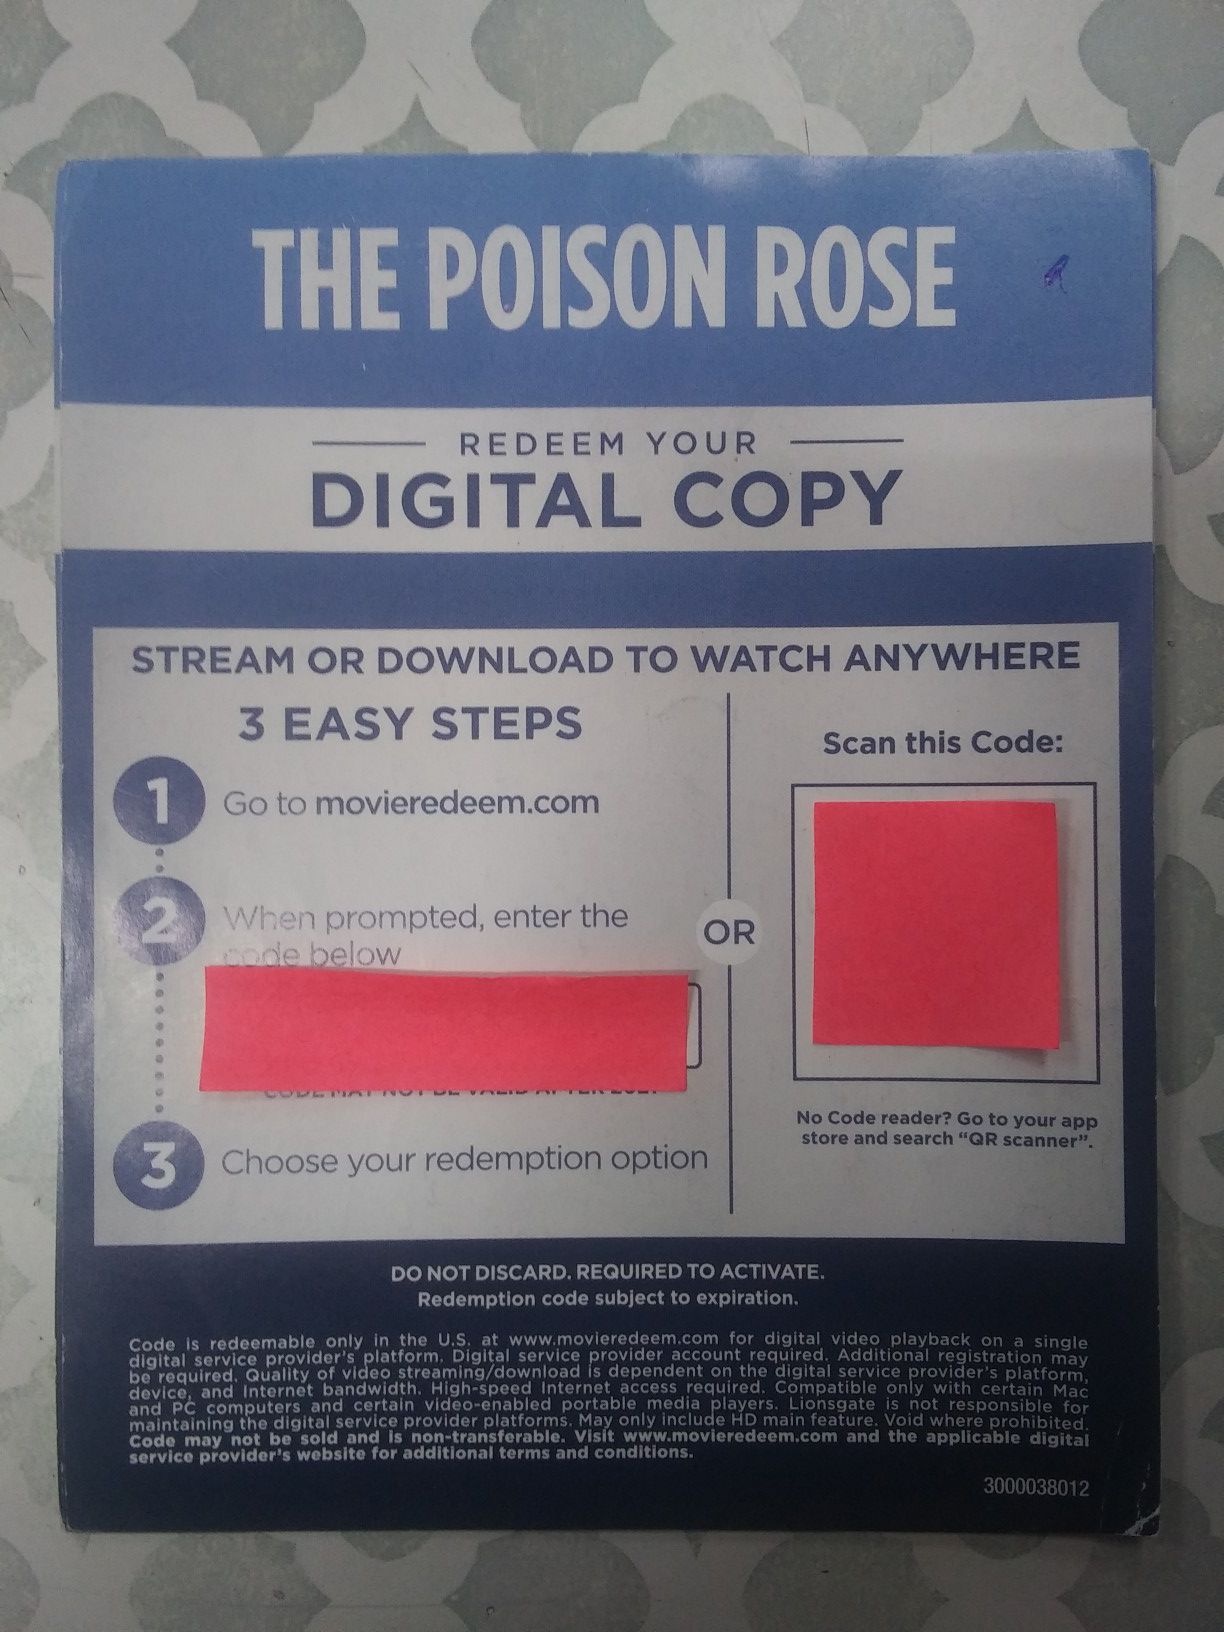 The poison rose digital movie